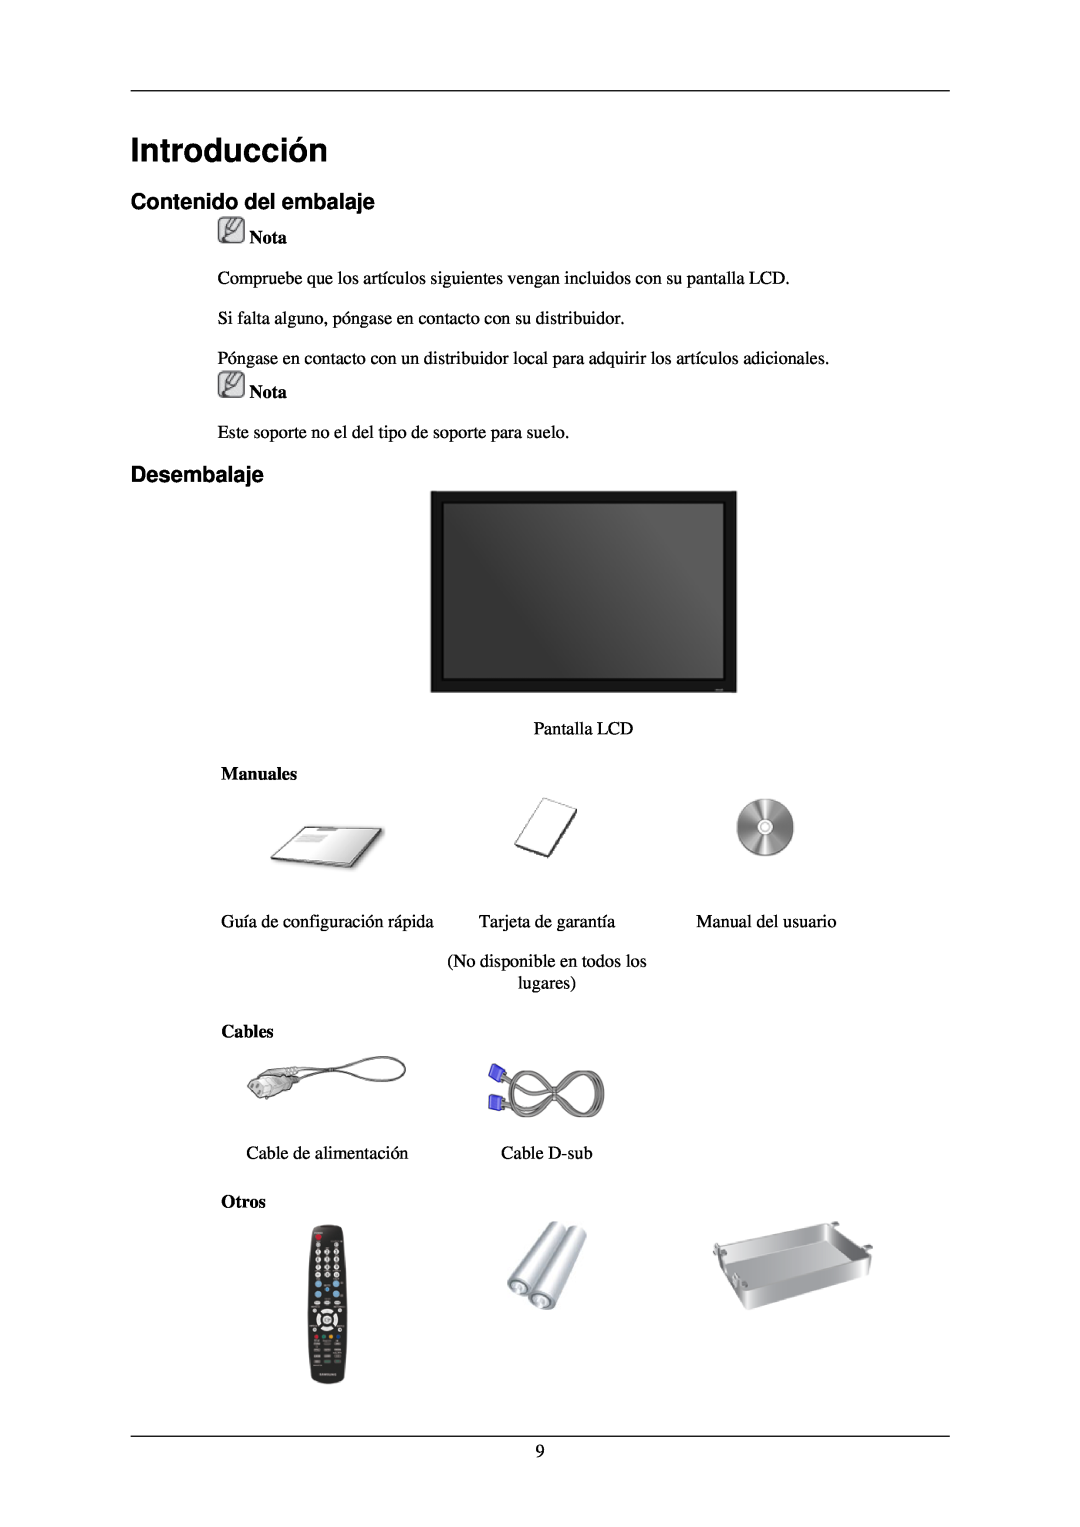 Samsung LH40TCUMBG/EN, LH46TCUMBC/EN manual Introducción, Contenido del embalaje, Desembalaje, Manuales, Cables, Otros, Nota 